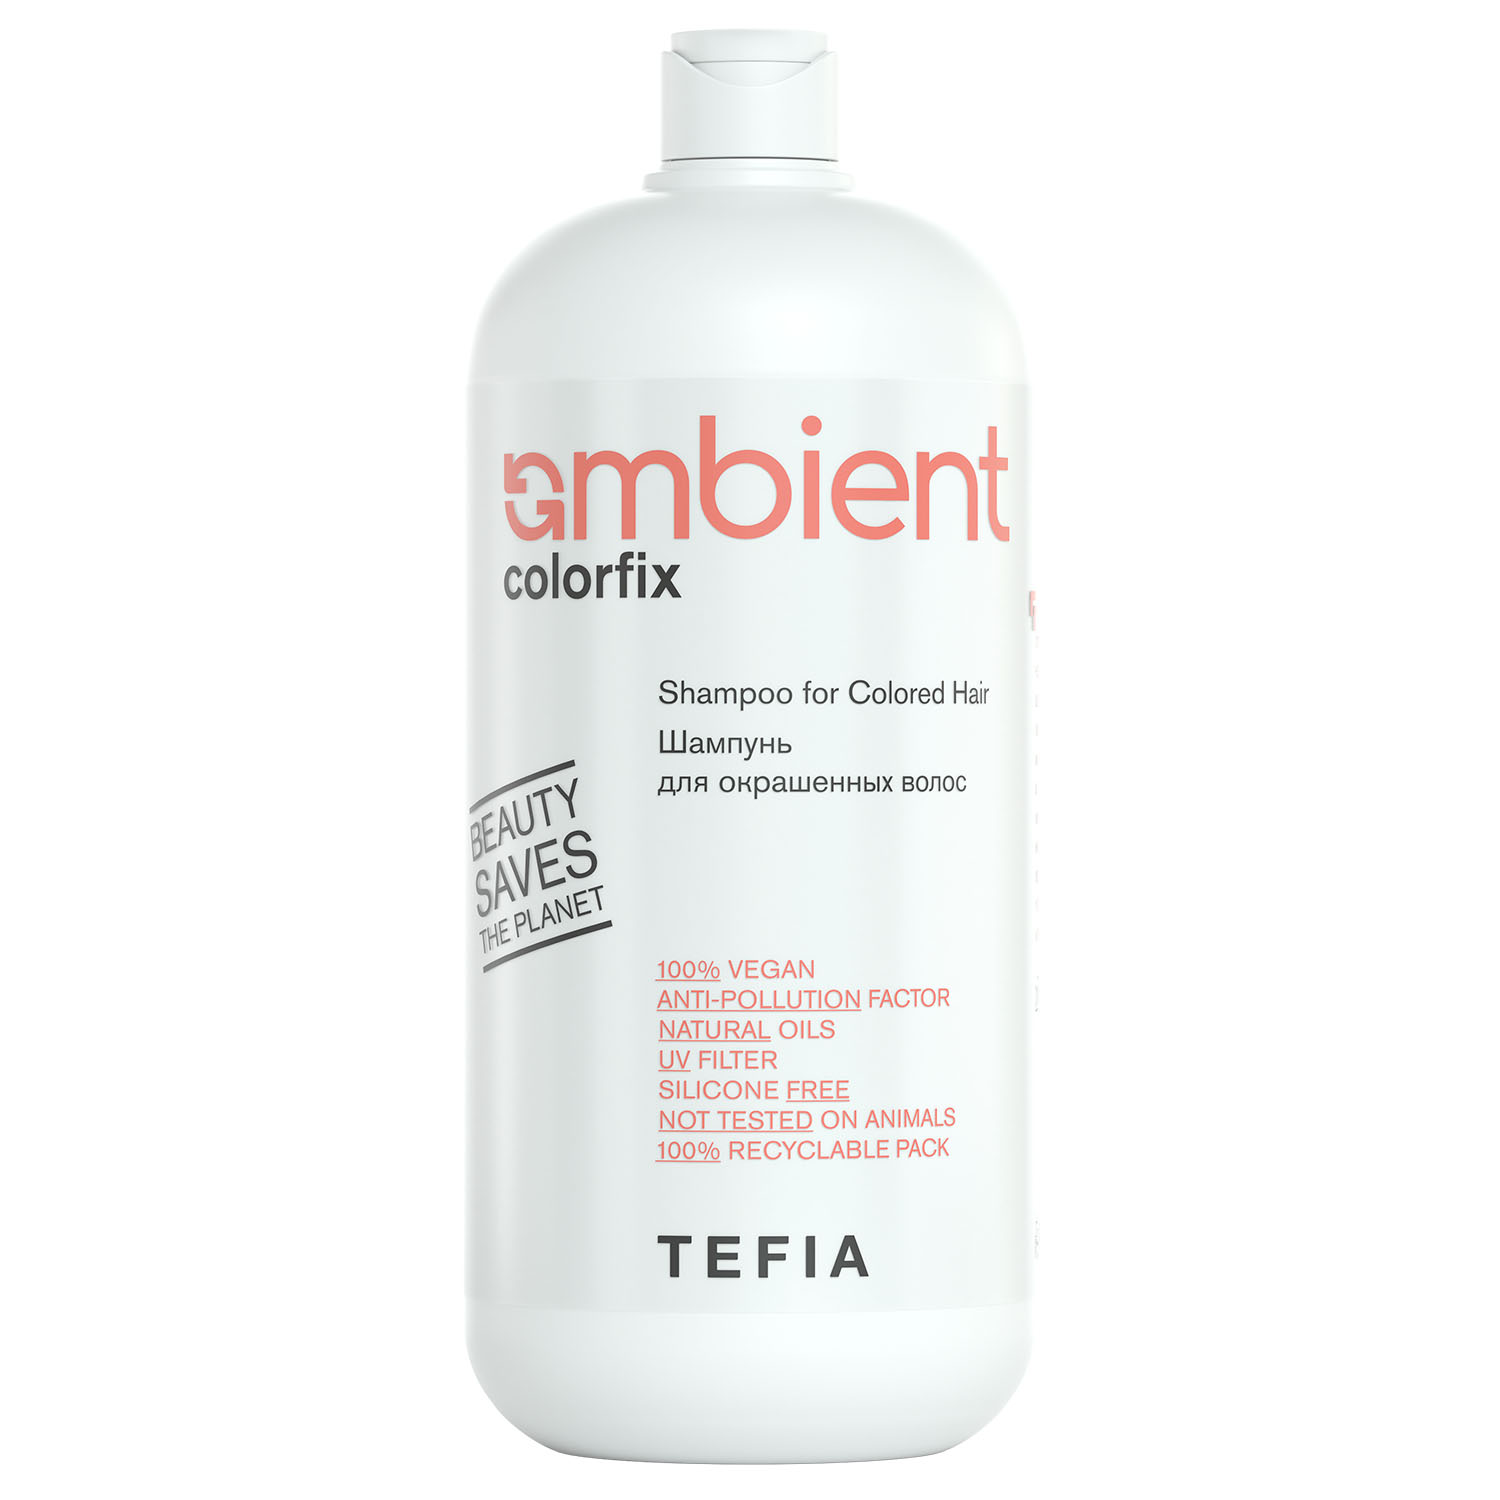 Tefia Шампунь для окрашенных волос Shampoo for Colored Hair, 950 мл (Tefia, Ambient) tefia шампунь для окрашенных волос shampoo for colored hair 250 мл tefia ambient